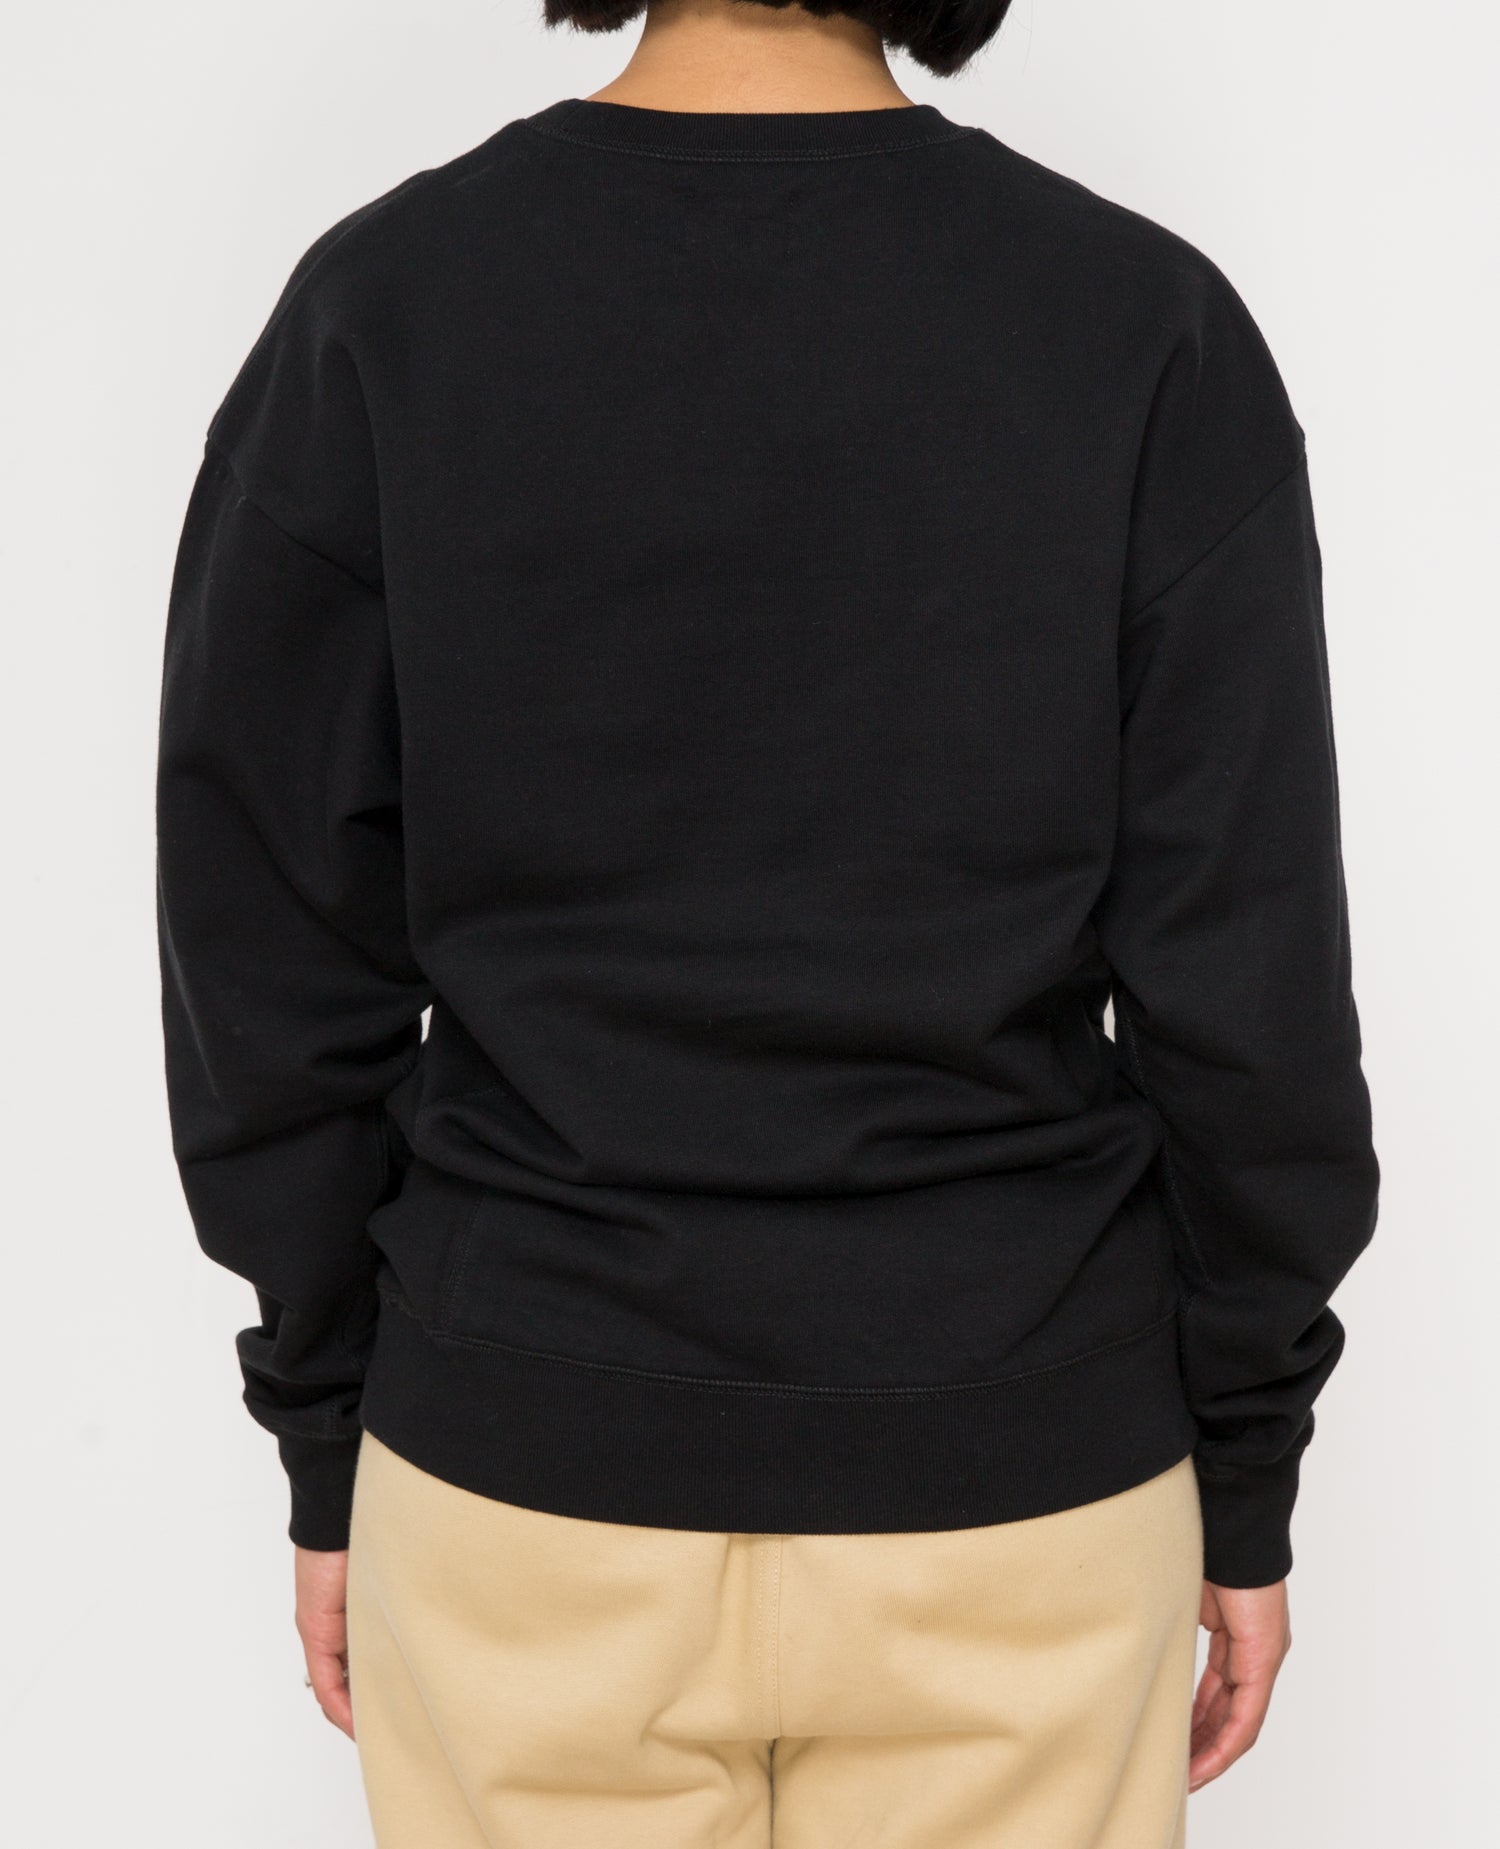 Patta Basic Crewneck Sweater (Black)